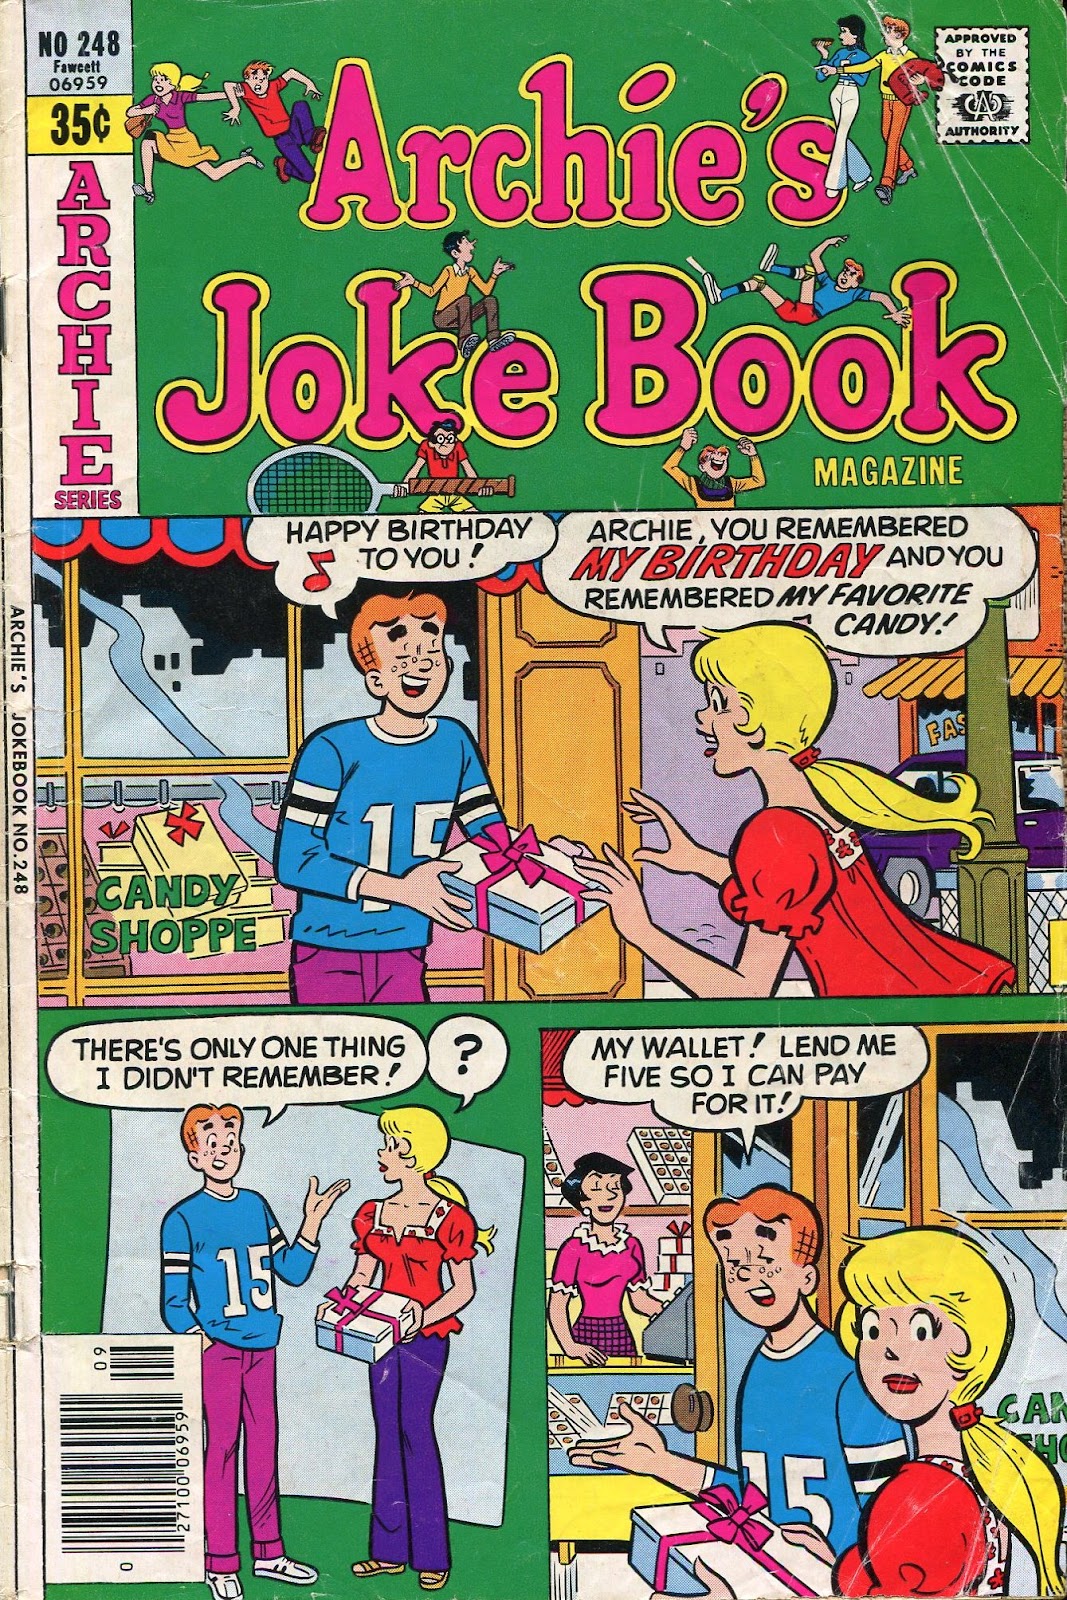 Archie's Joke Book Magazine issue 248 - Page 1